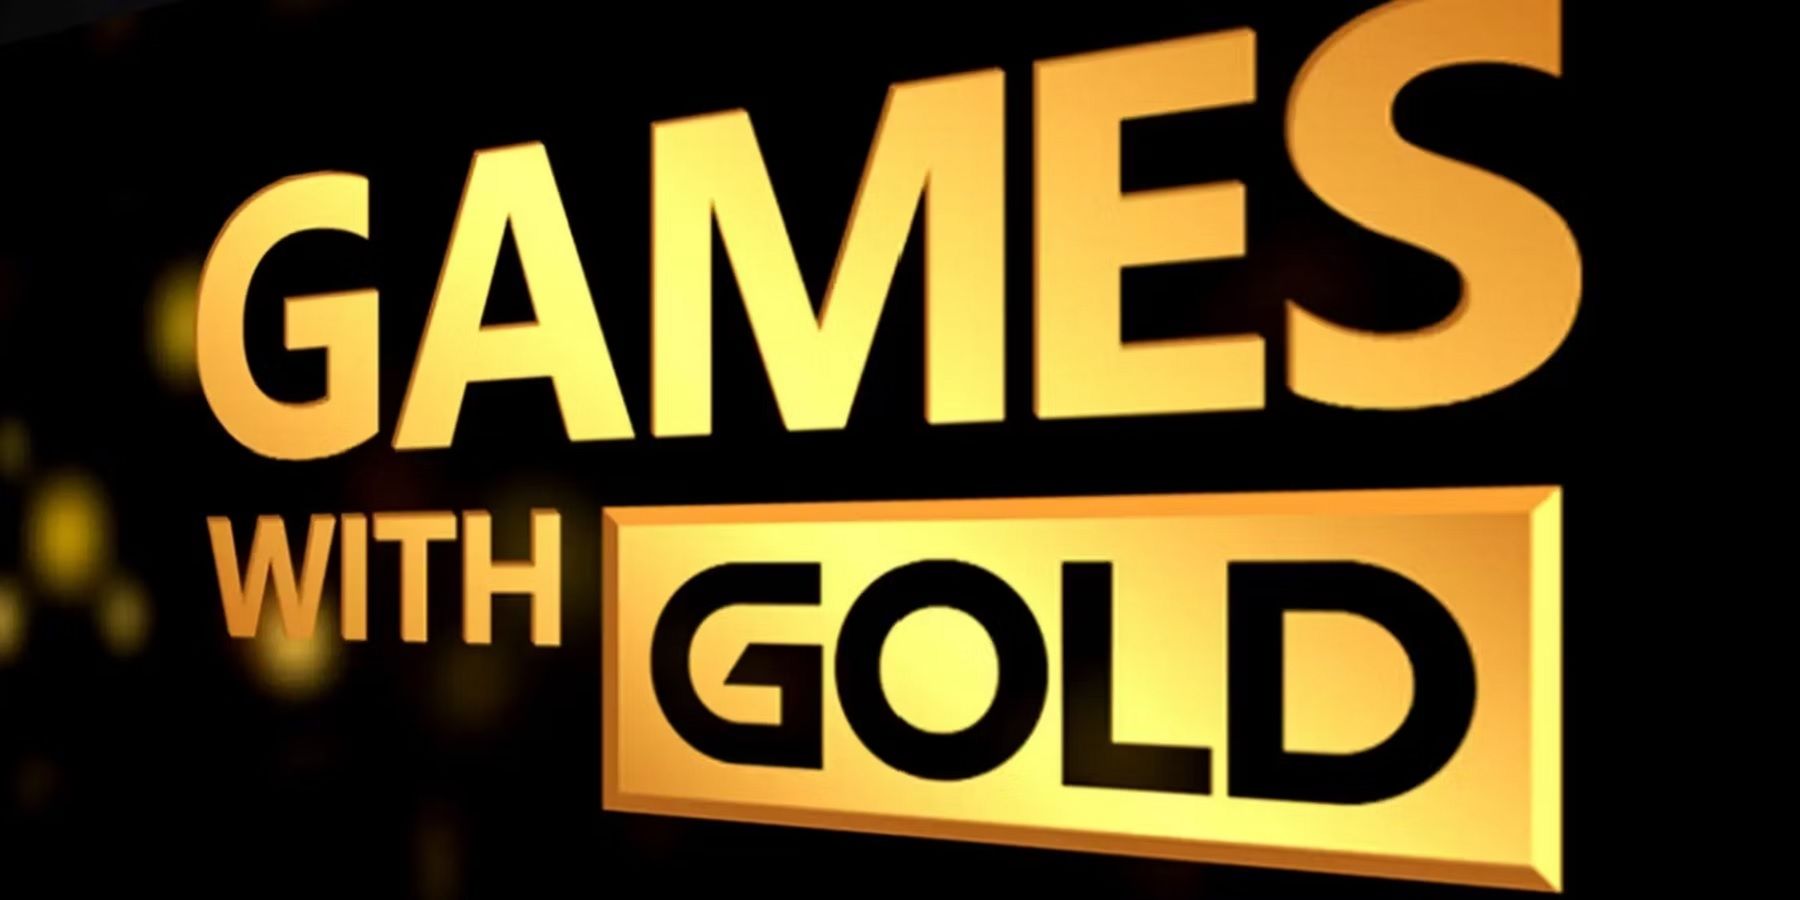 games with gold logo diagonal